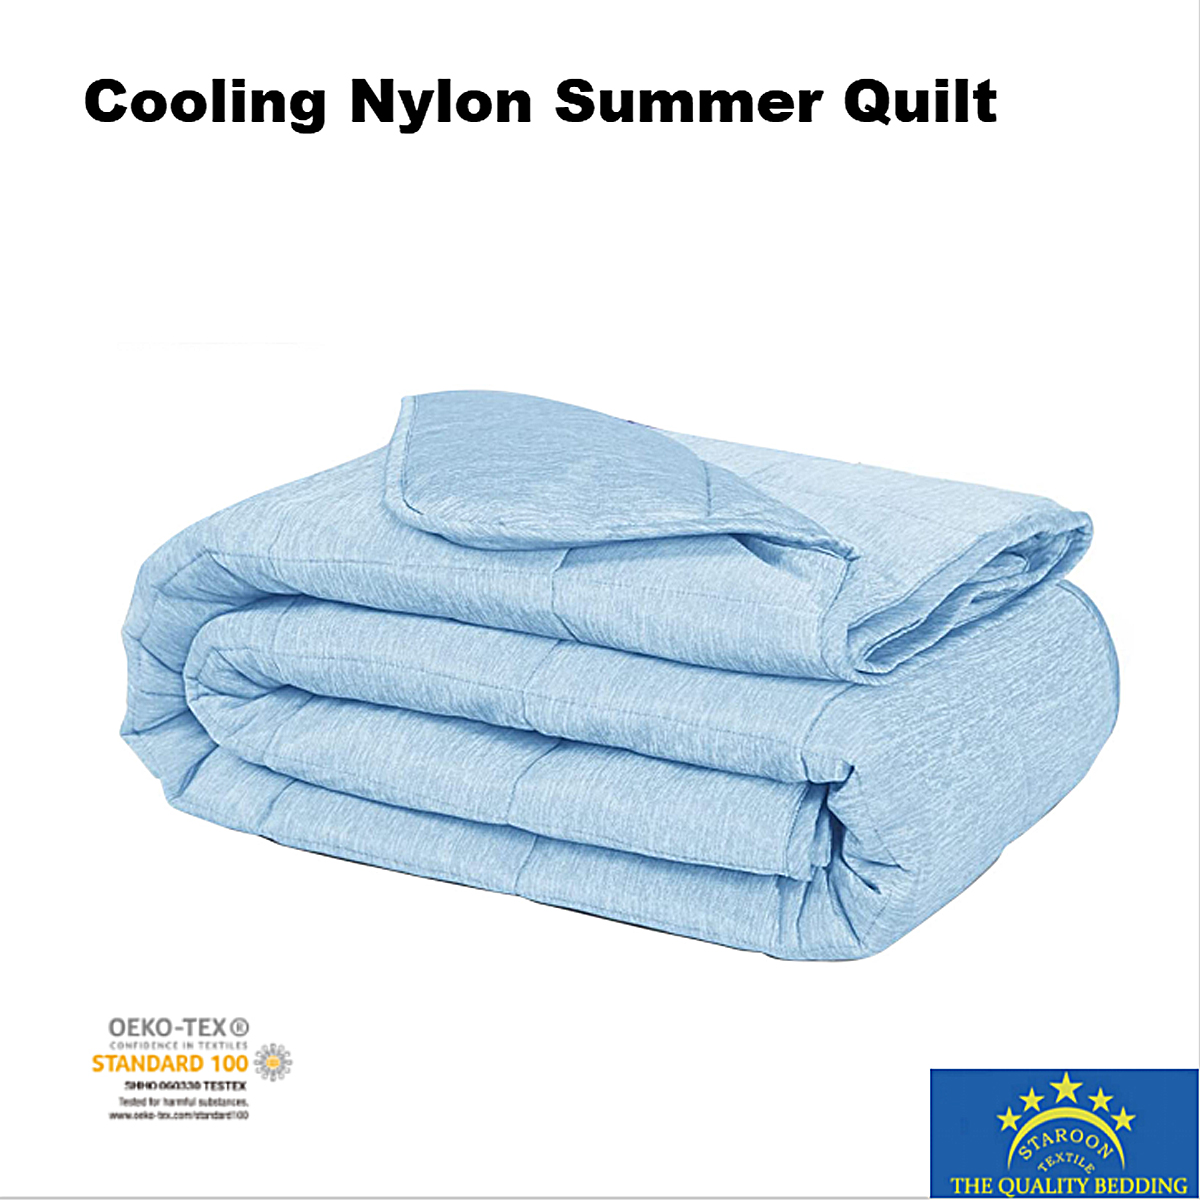 COOLING NYLON SUMMER QUILT